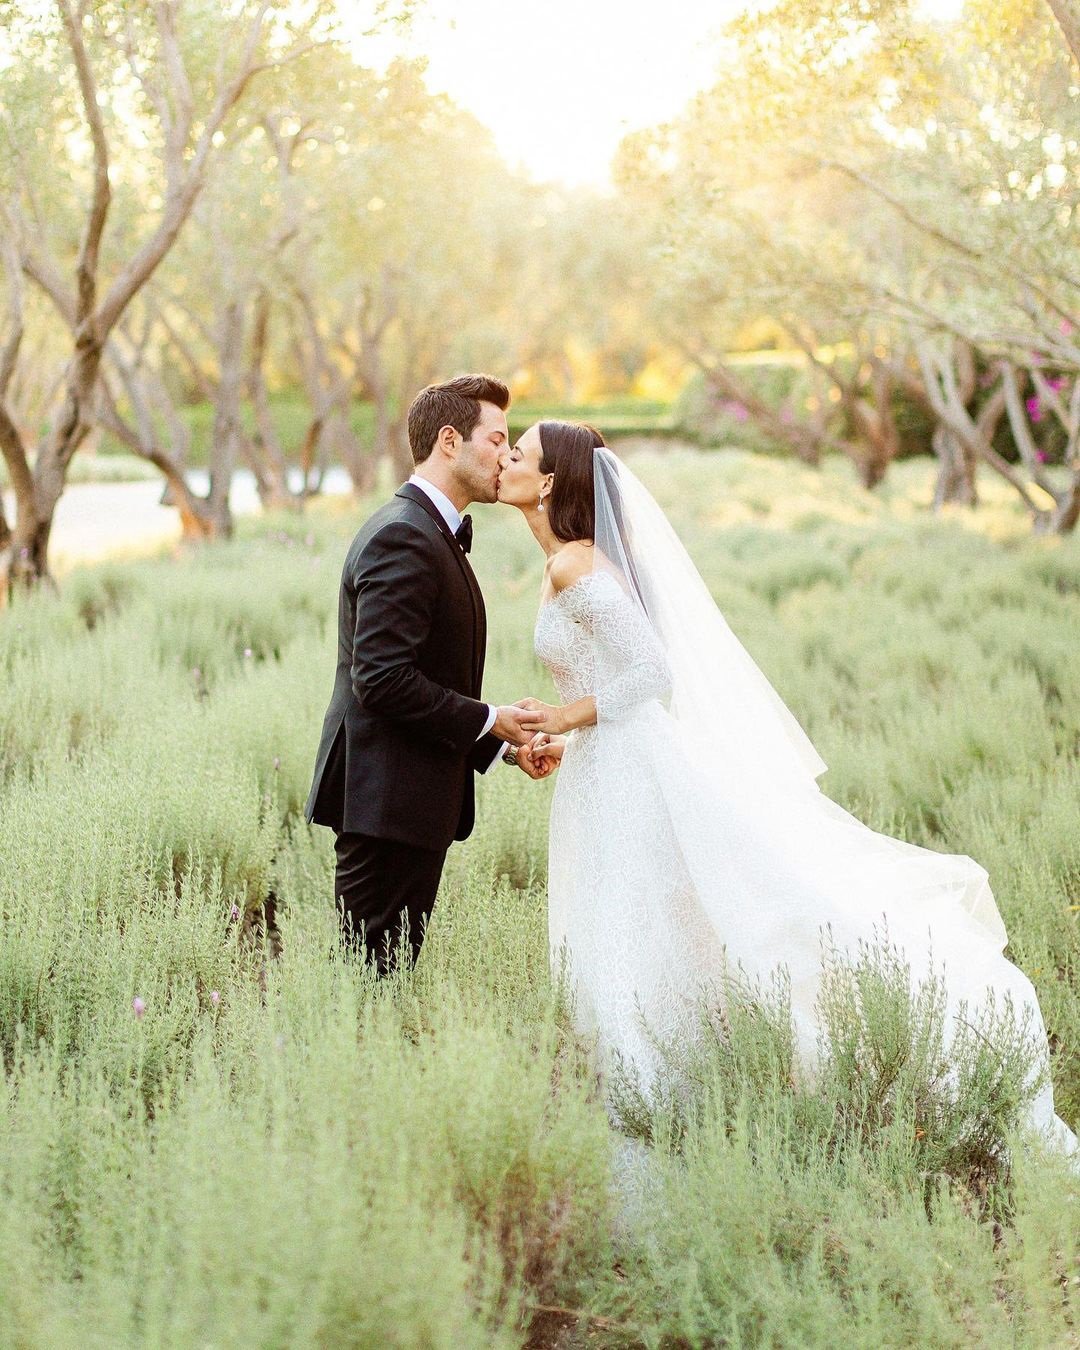 popular wedding photo ideas kiss in garden chardphoto